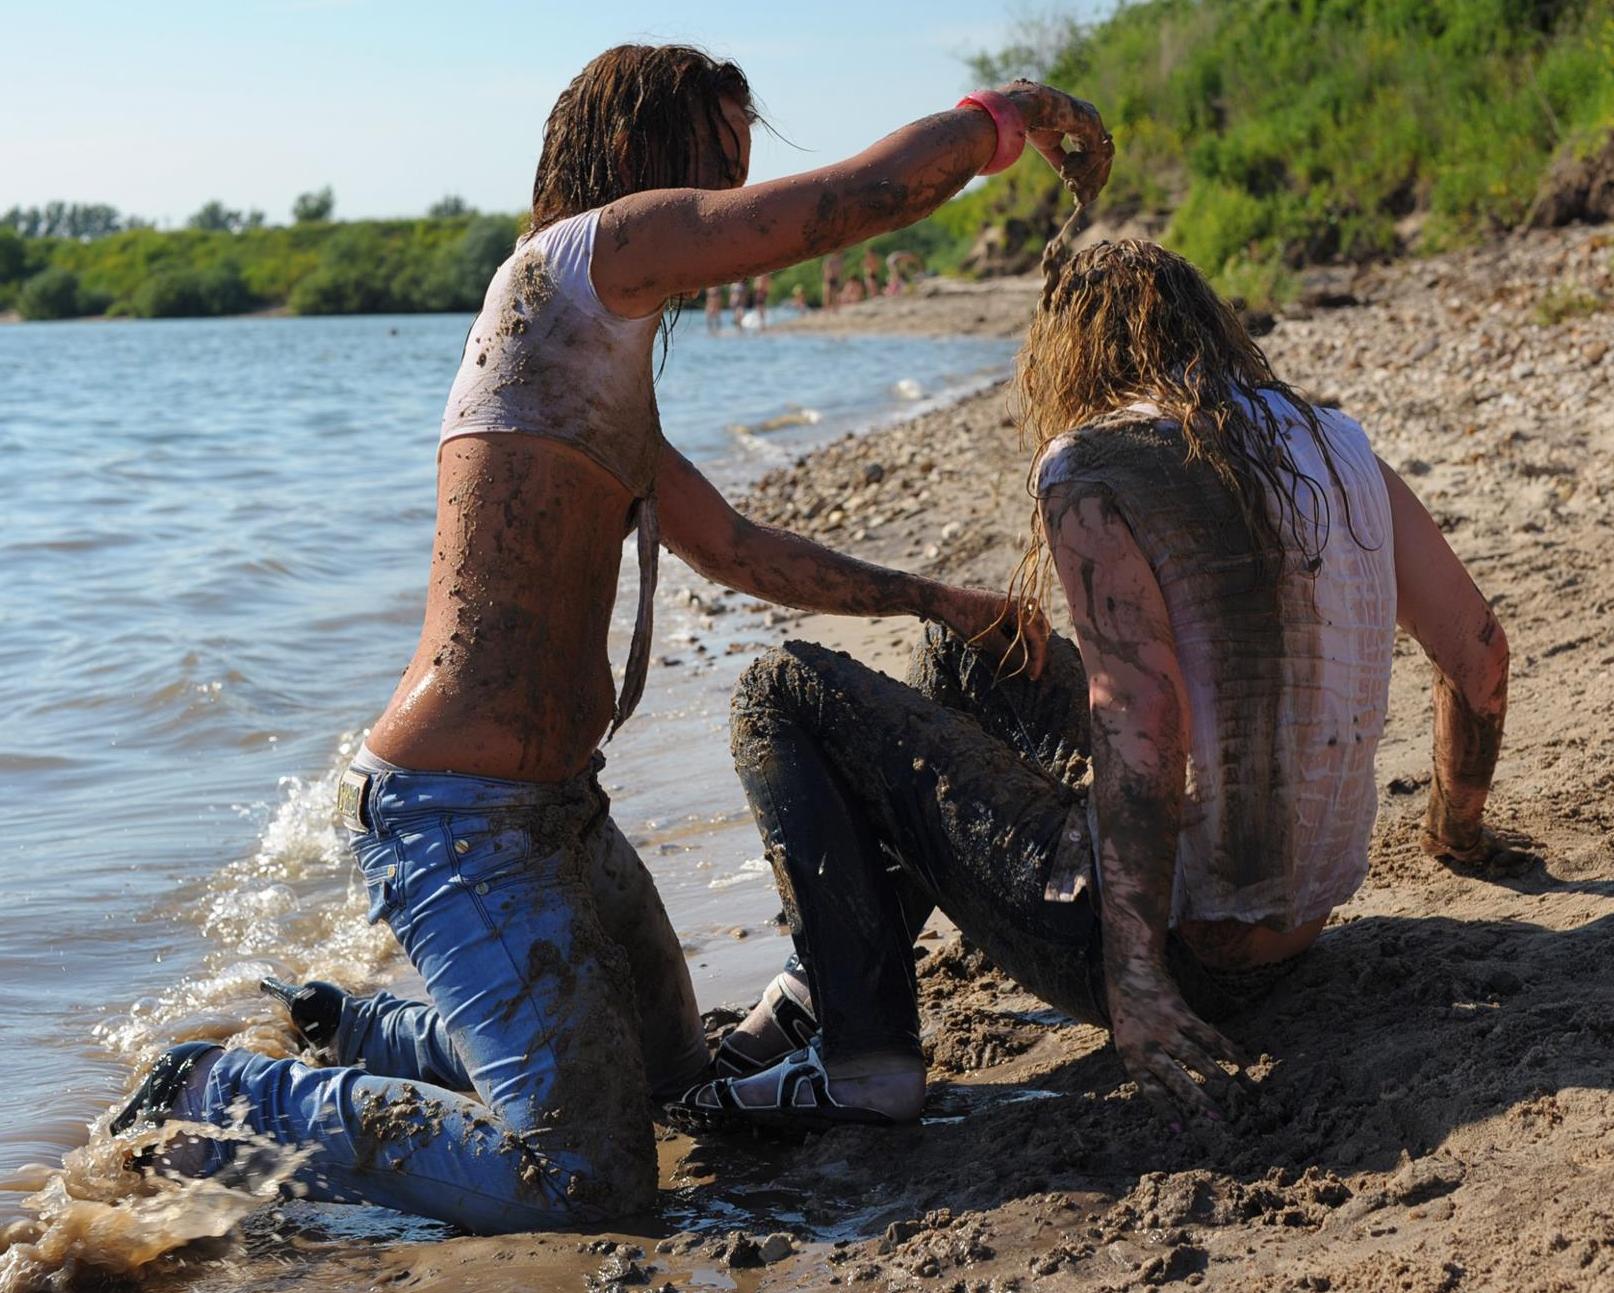 Messy Girls wearing Muddy Blue Denim Jeans and Muddy White Tee-Shirts.